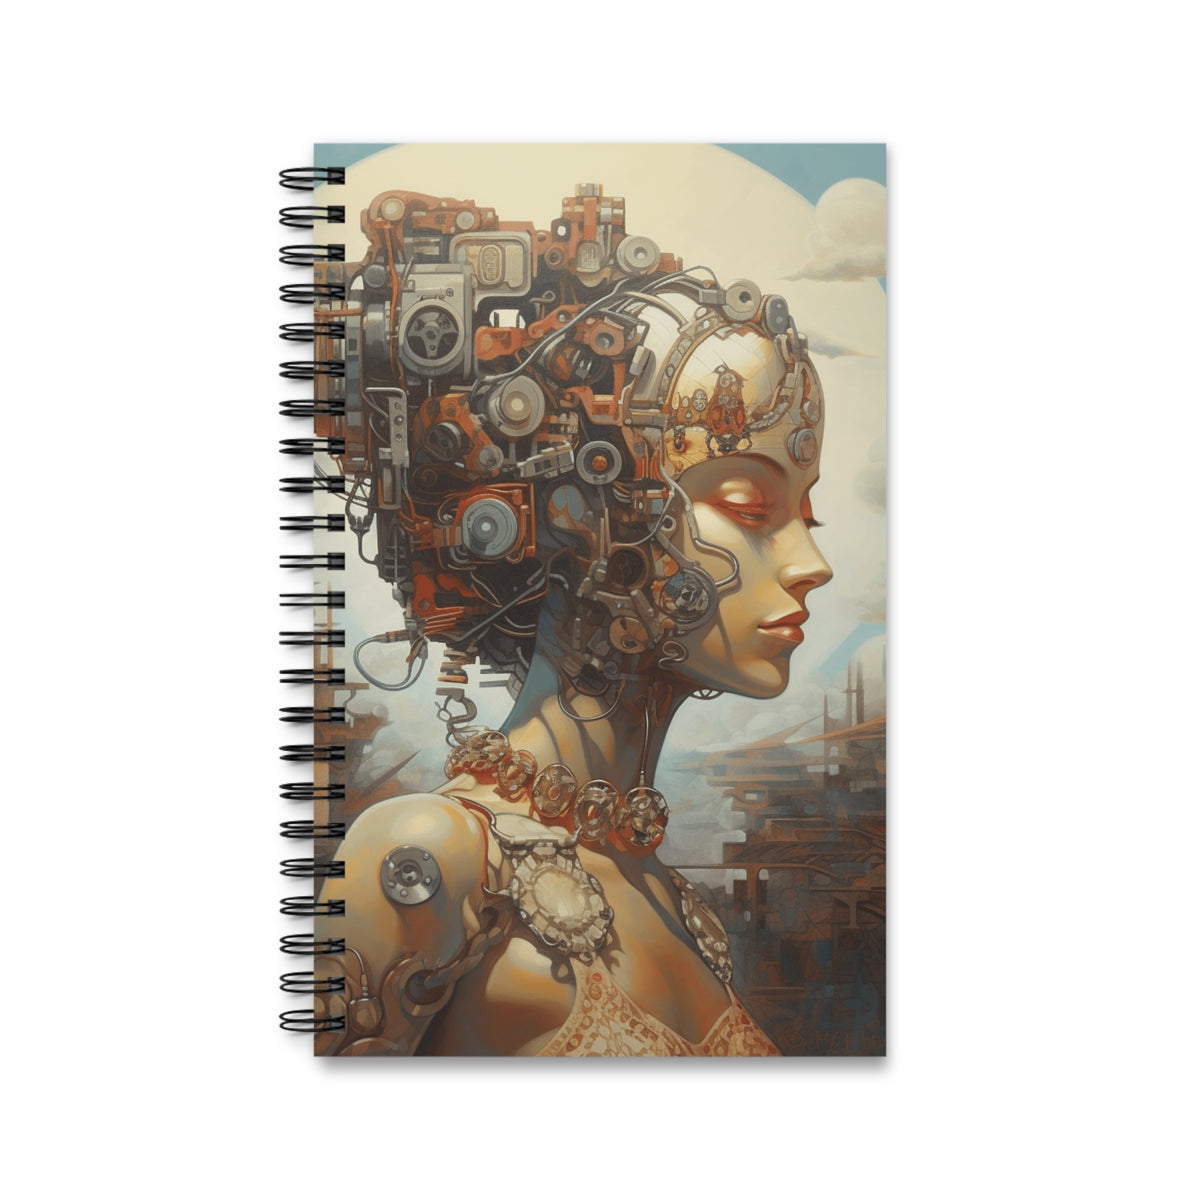 Steampunk time traveler Spiral Journal notebook